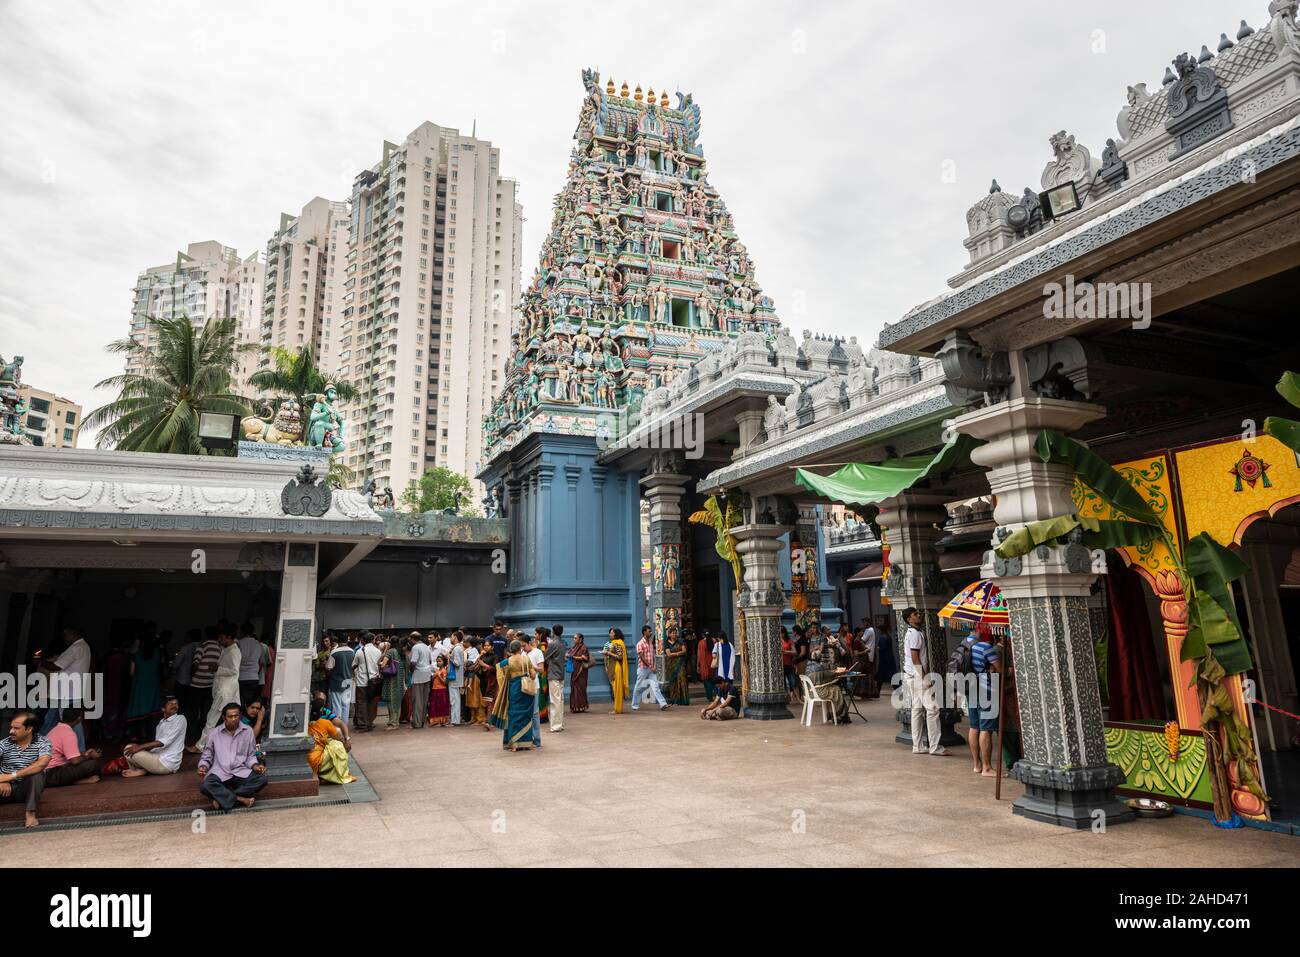 Sri Srinivasa Perumal Temple, Hindu temple, courtyard, district of Little India, Singapore Stock Photo